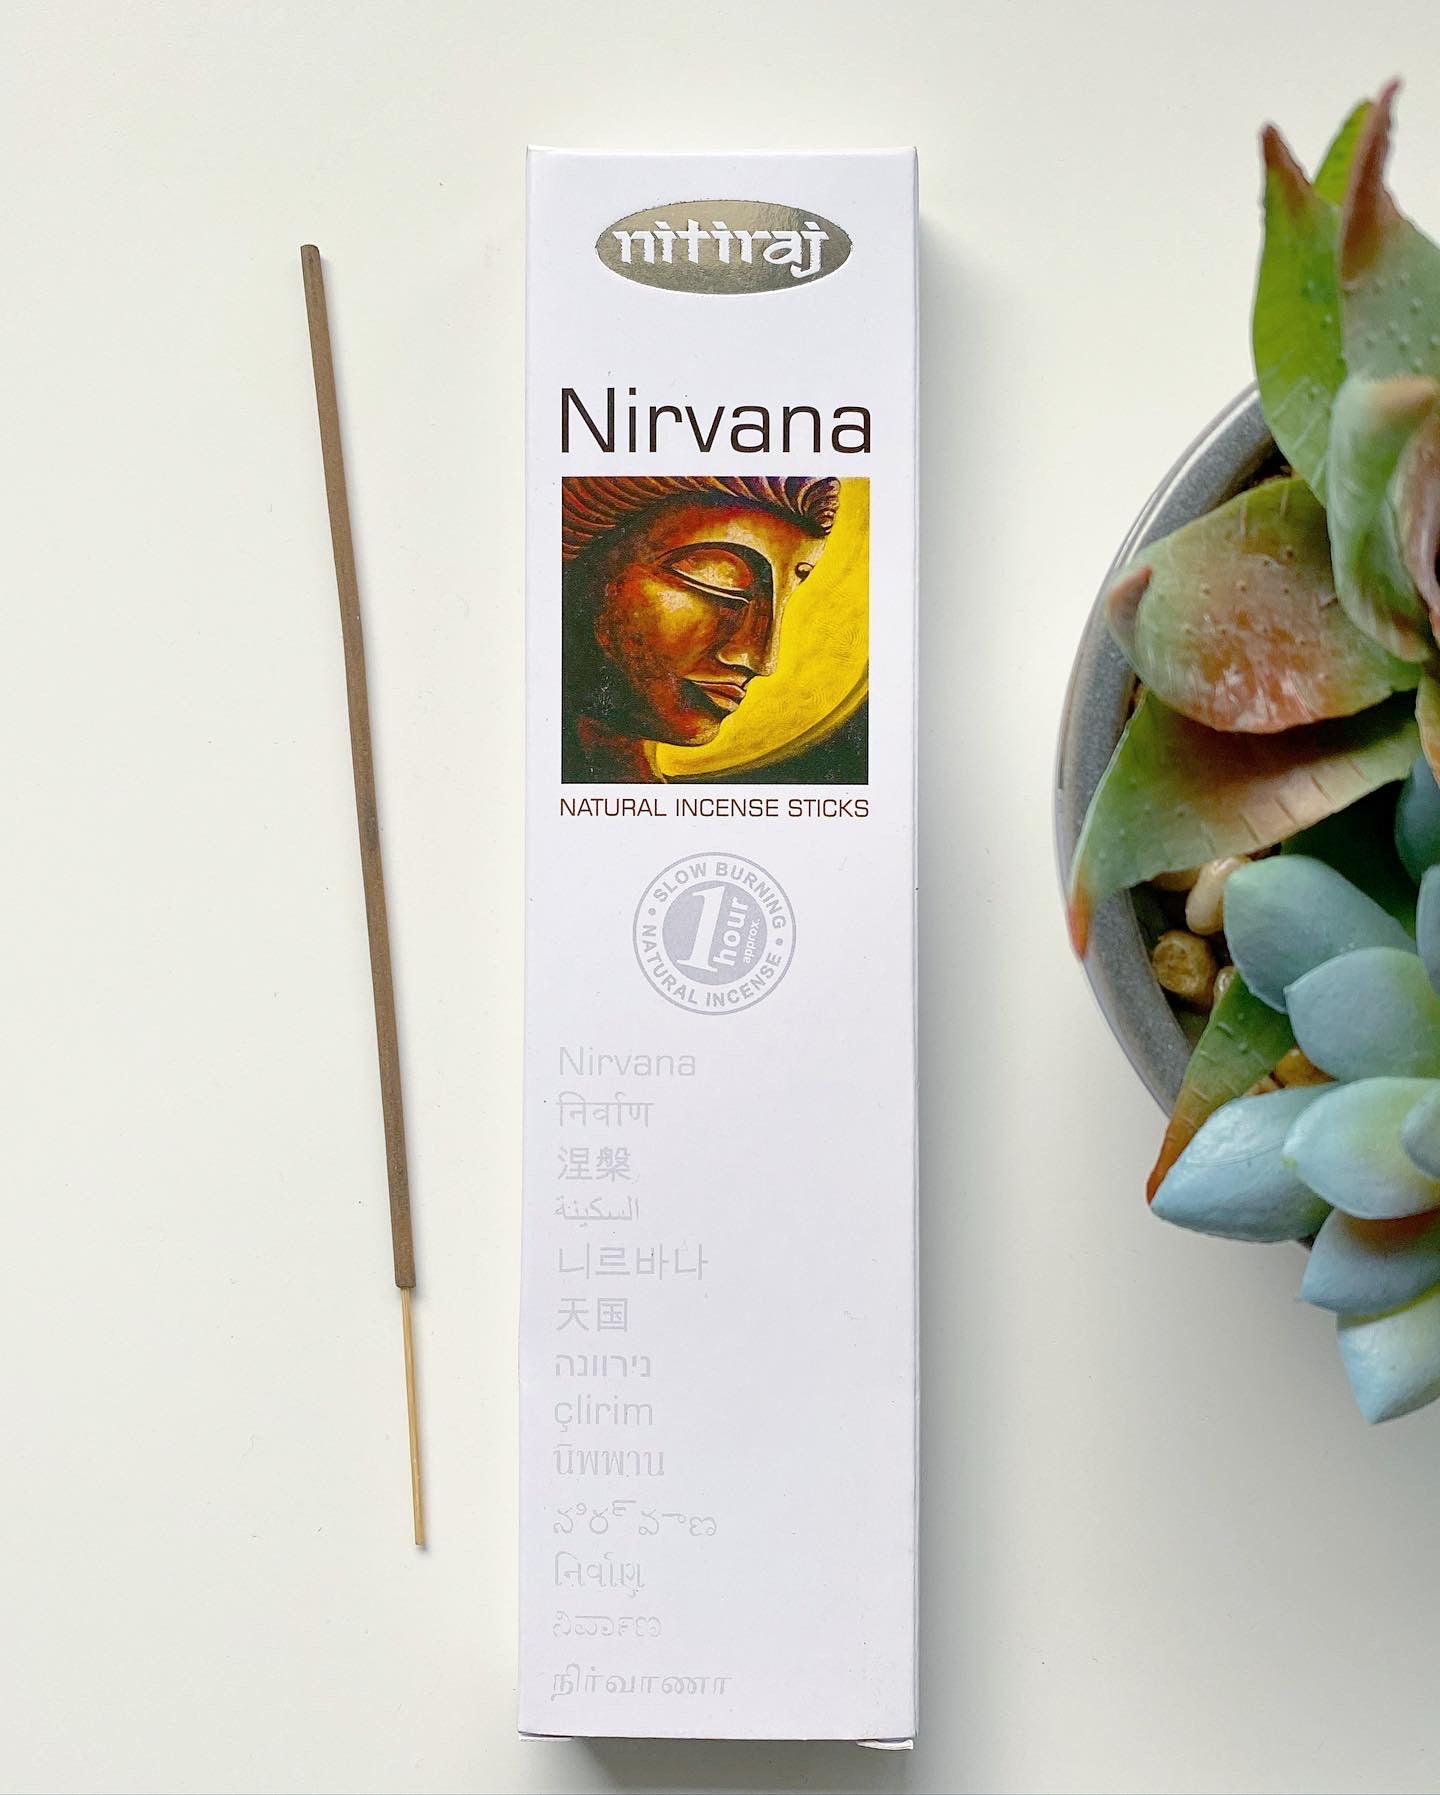 Nitiraj Platinum - Nirvana - Natural Incense Sticks